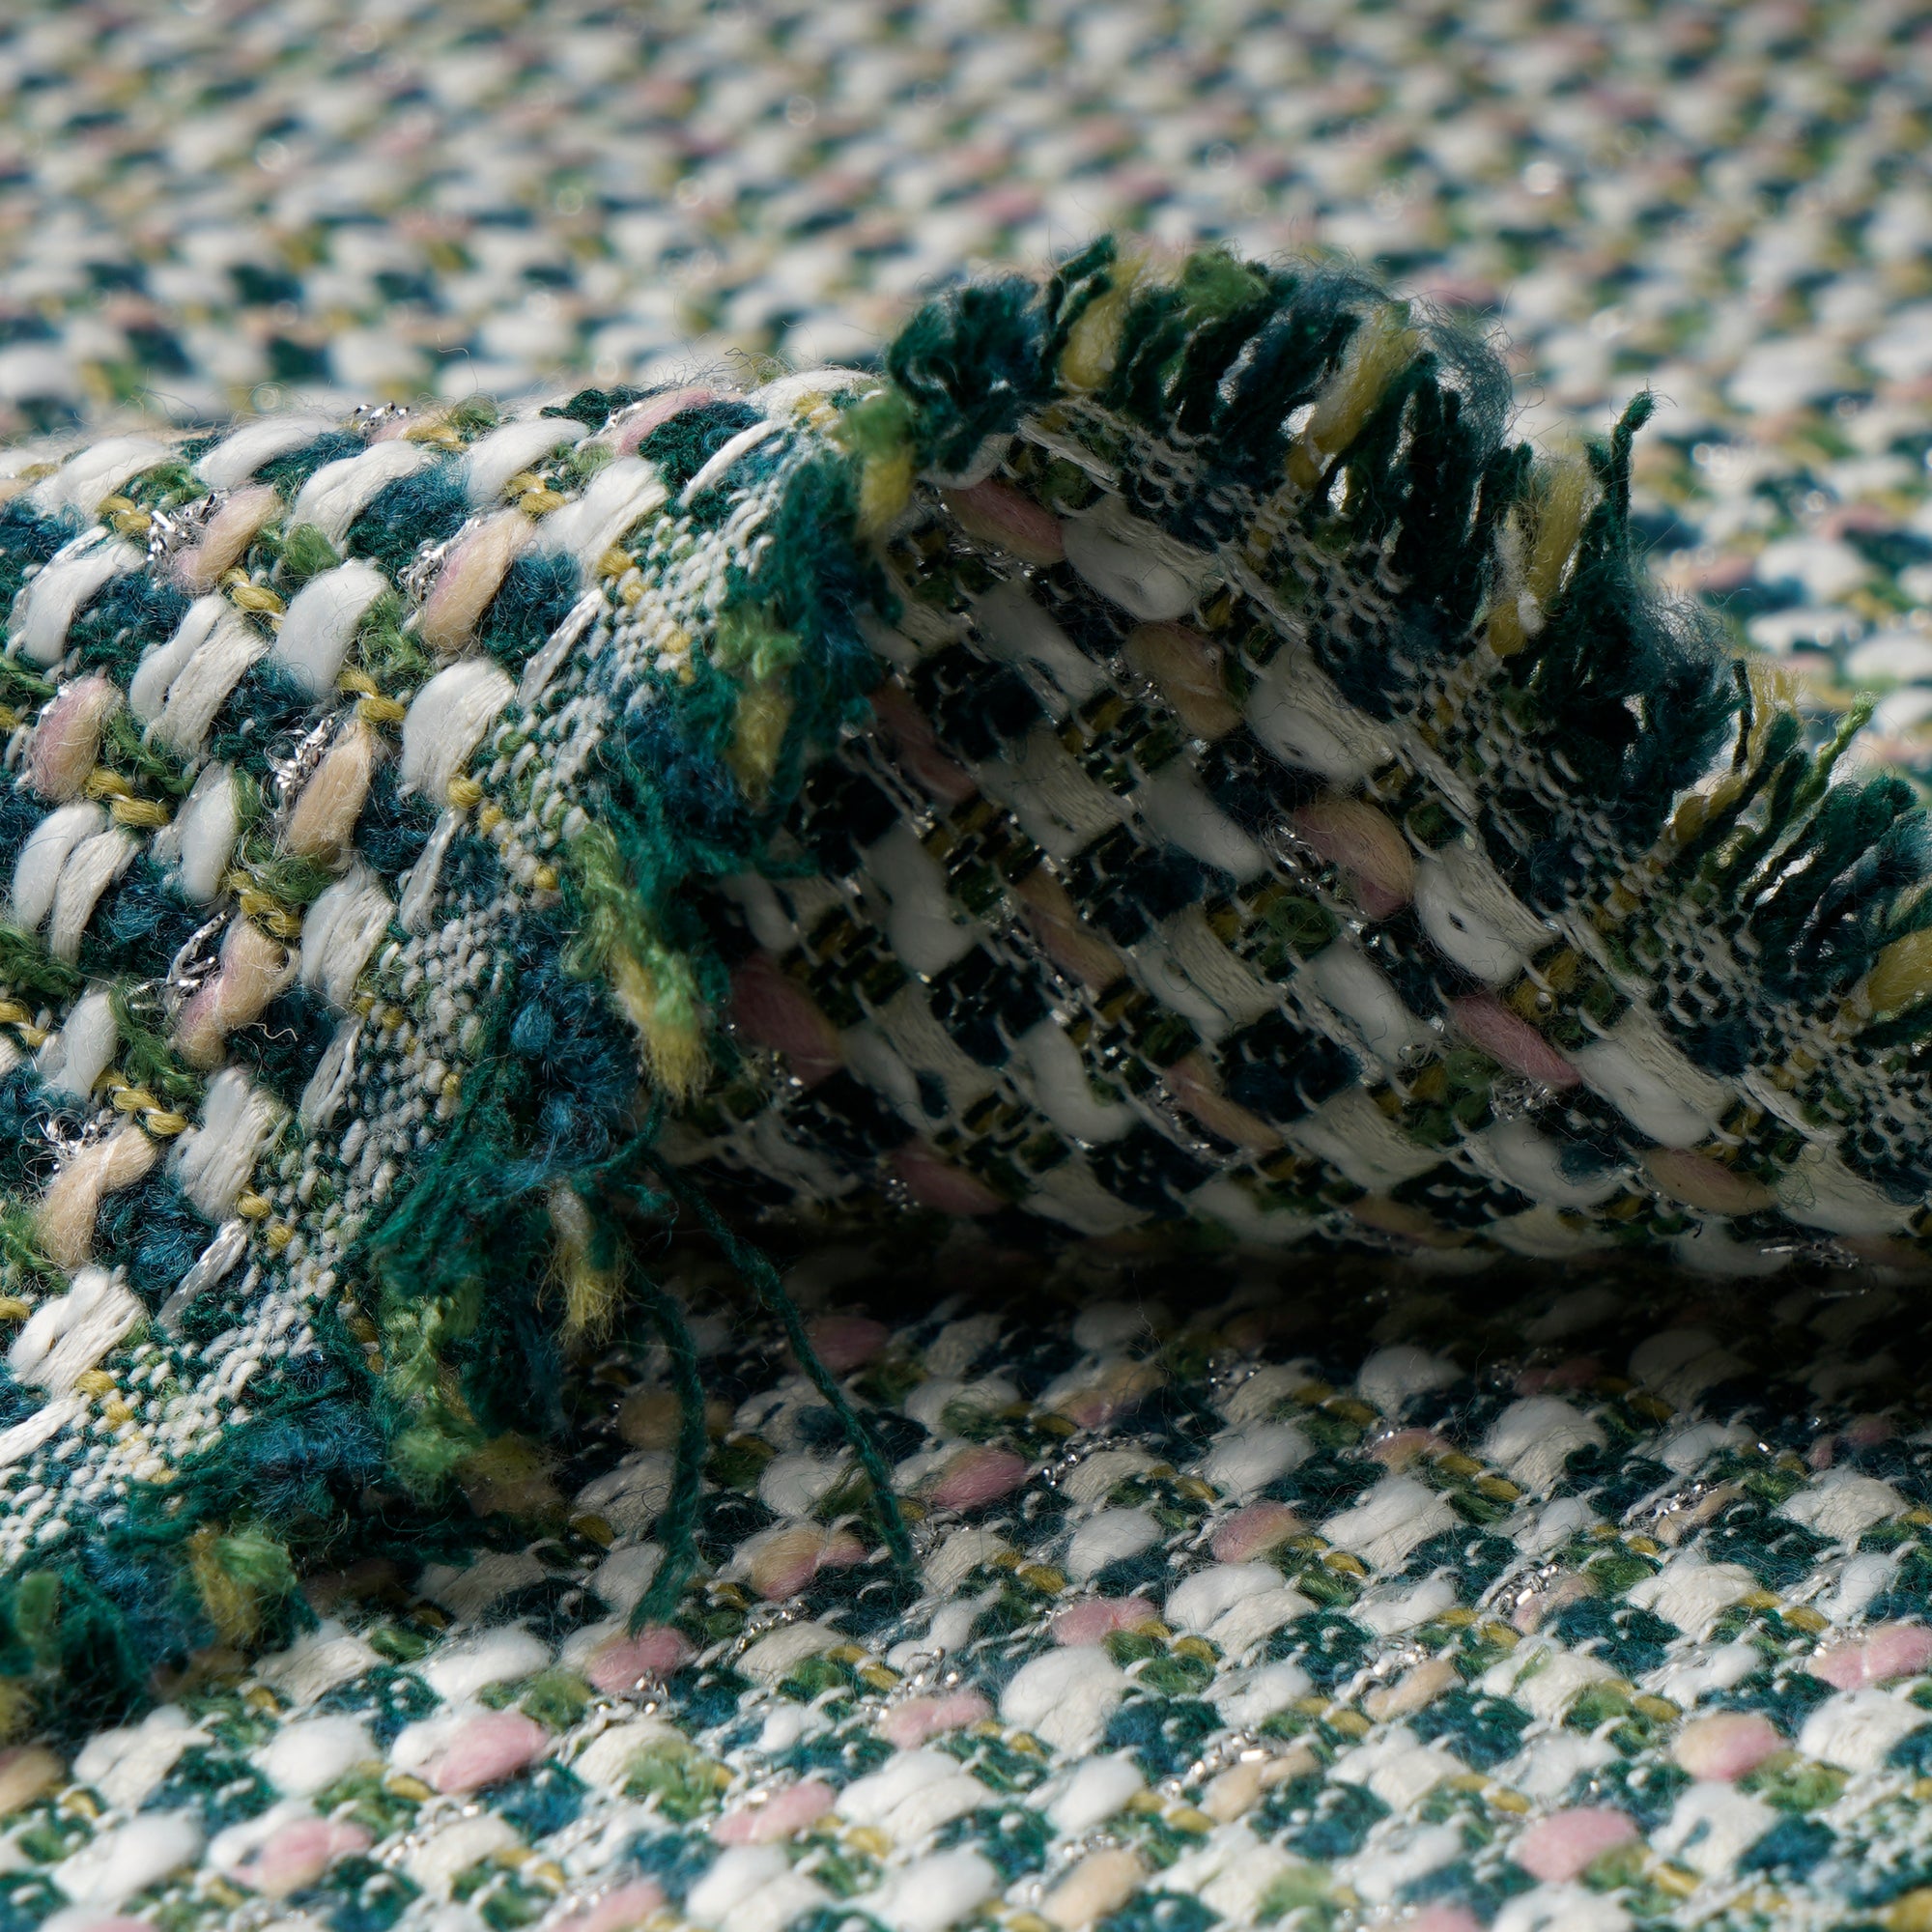 Green Premium Metallic Tweed Fabric (60" Width)